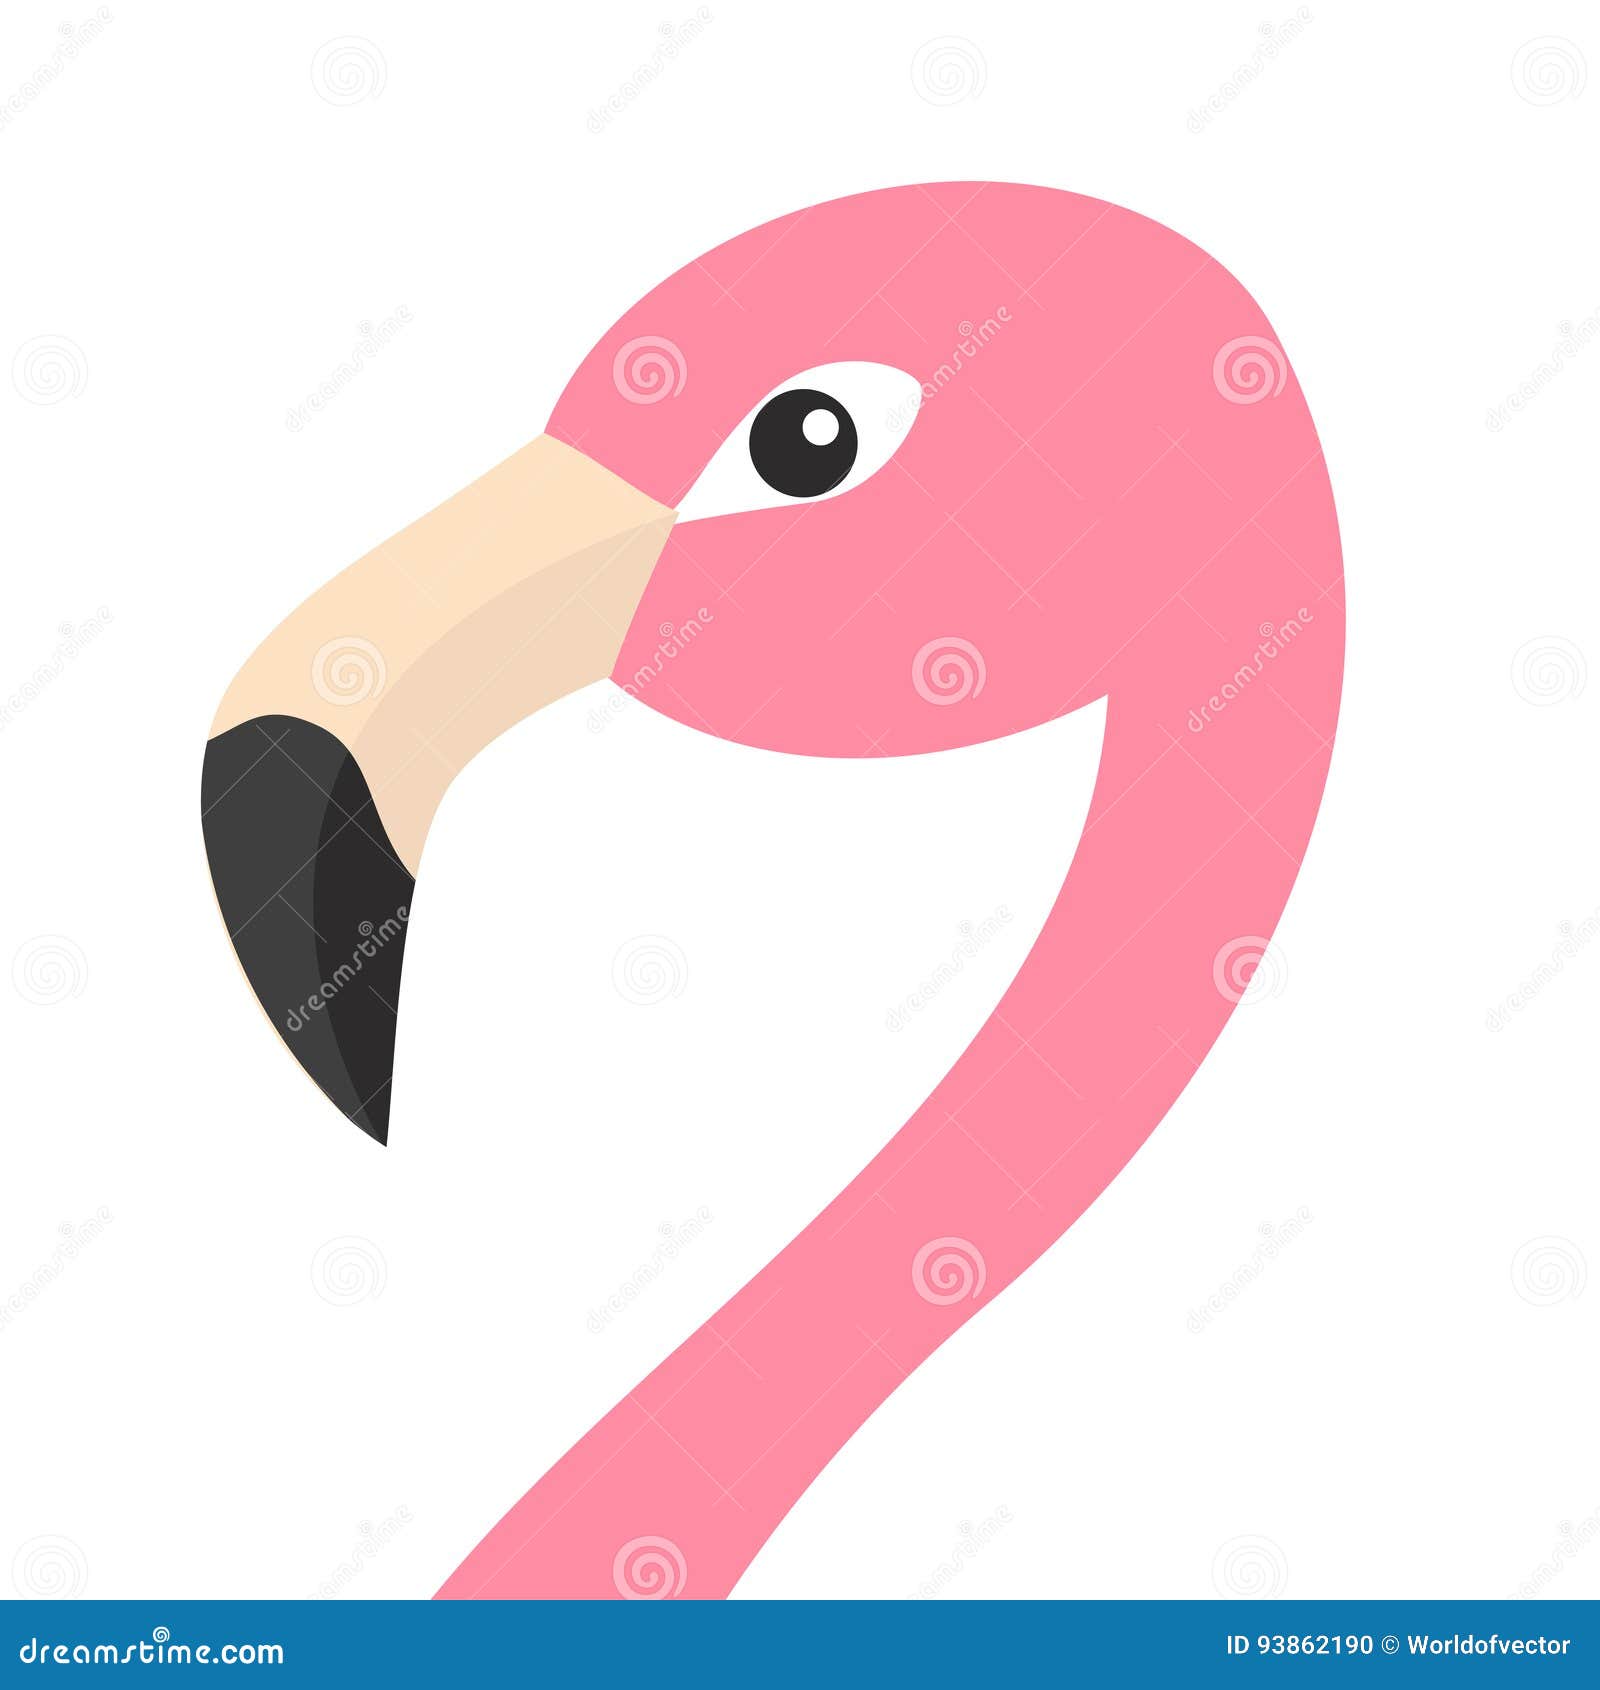 The Flamingo Head Colorful Pop Art Stock Photography | CartoonDealer ...